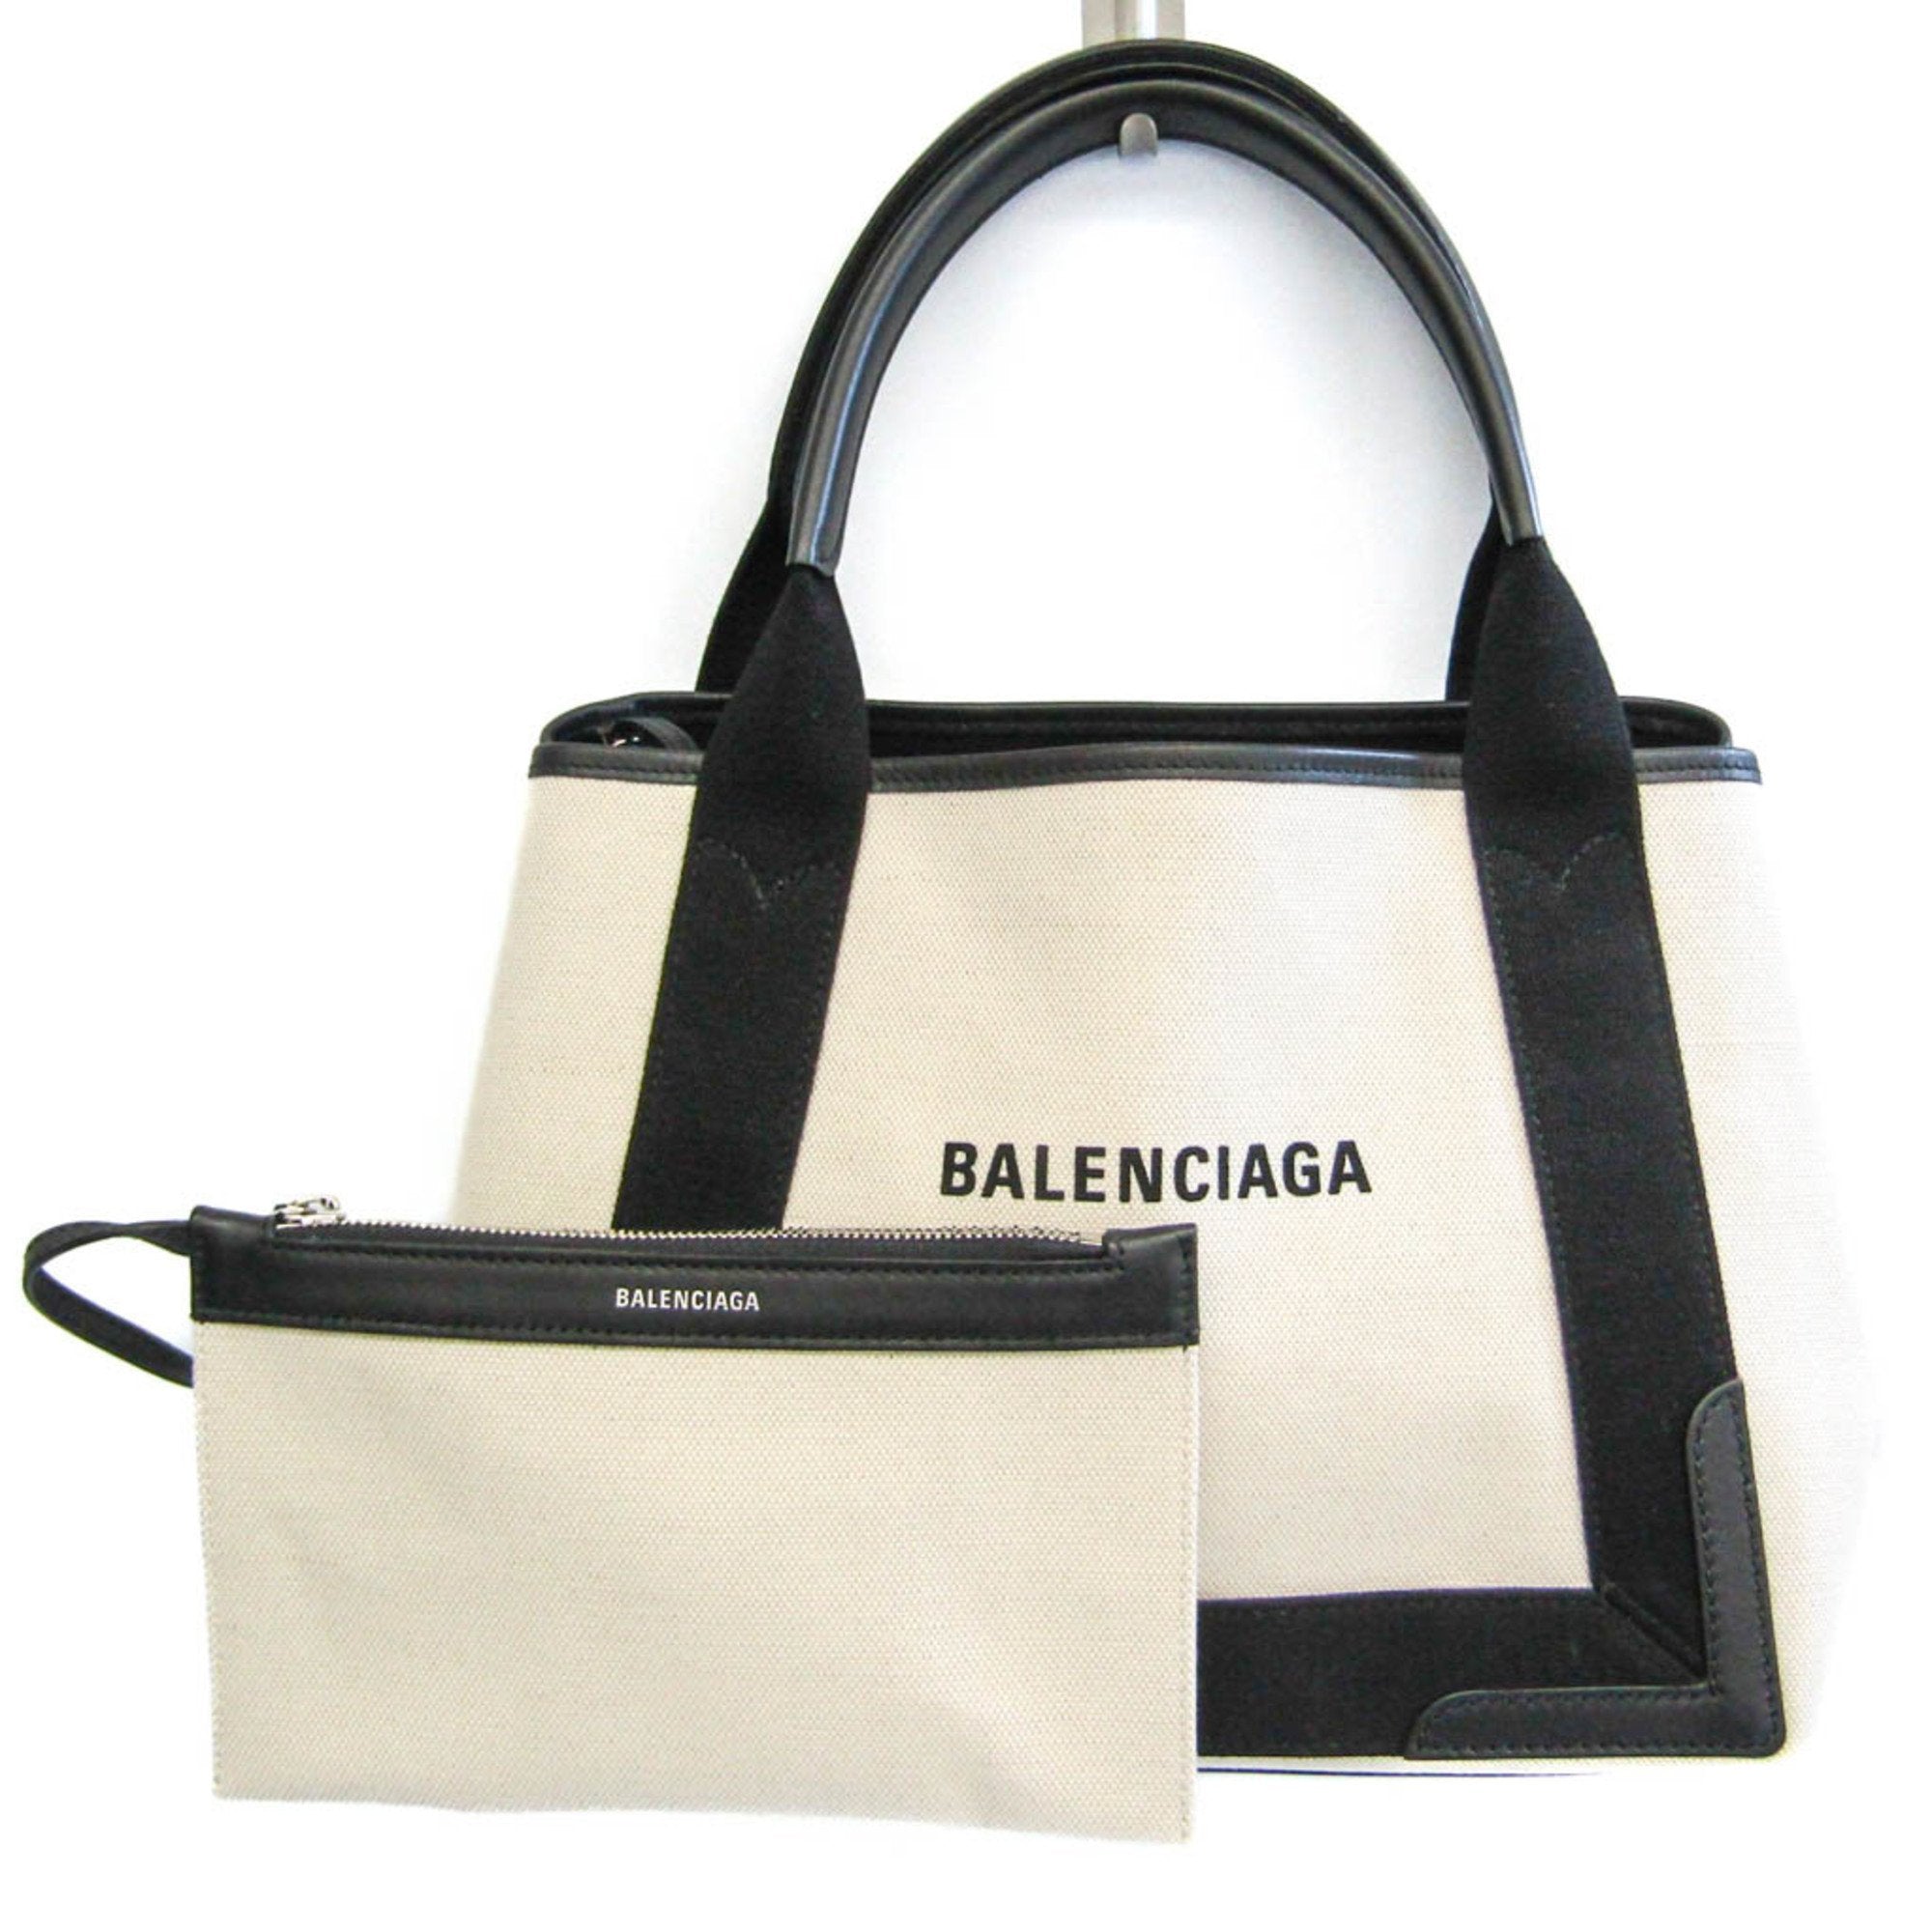 Balenciaga Cabas Small Tote Bag Leather Light Beige  Tote  fashionette